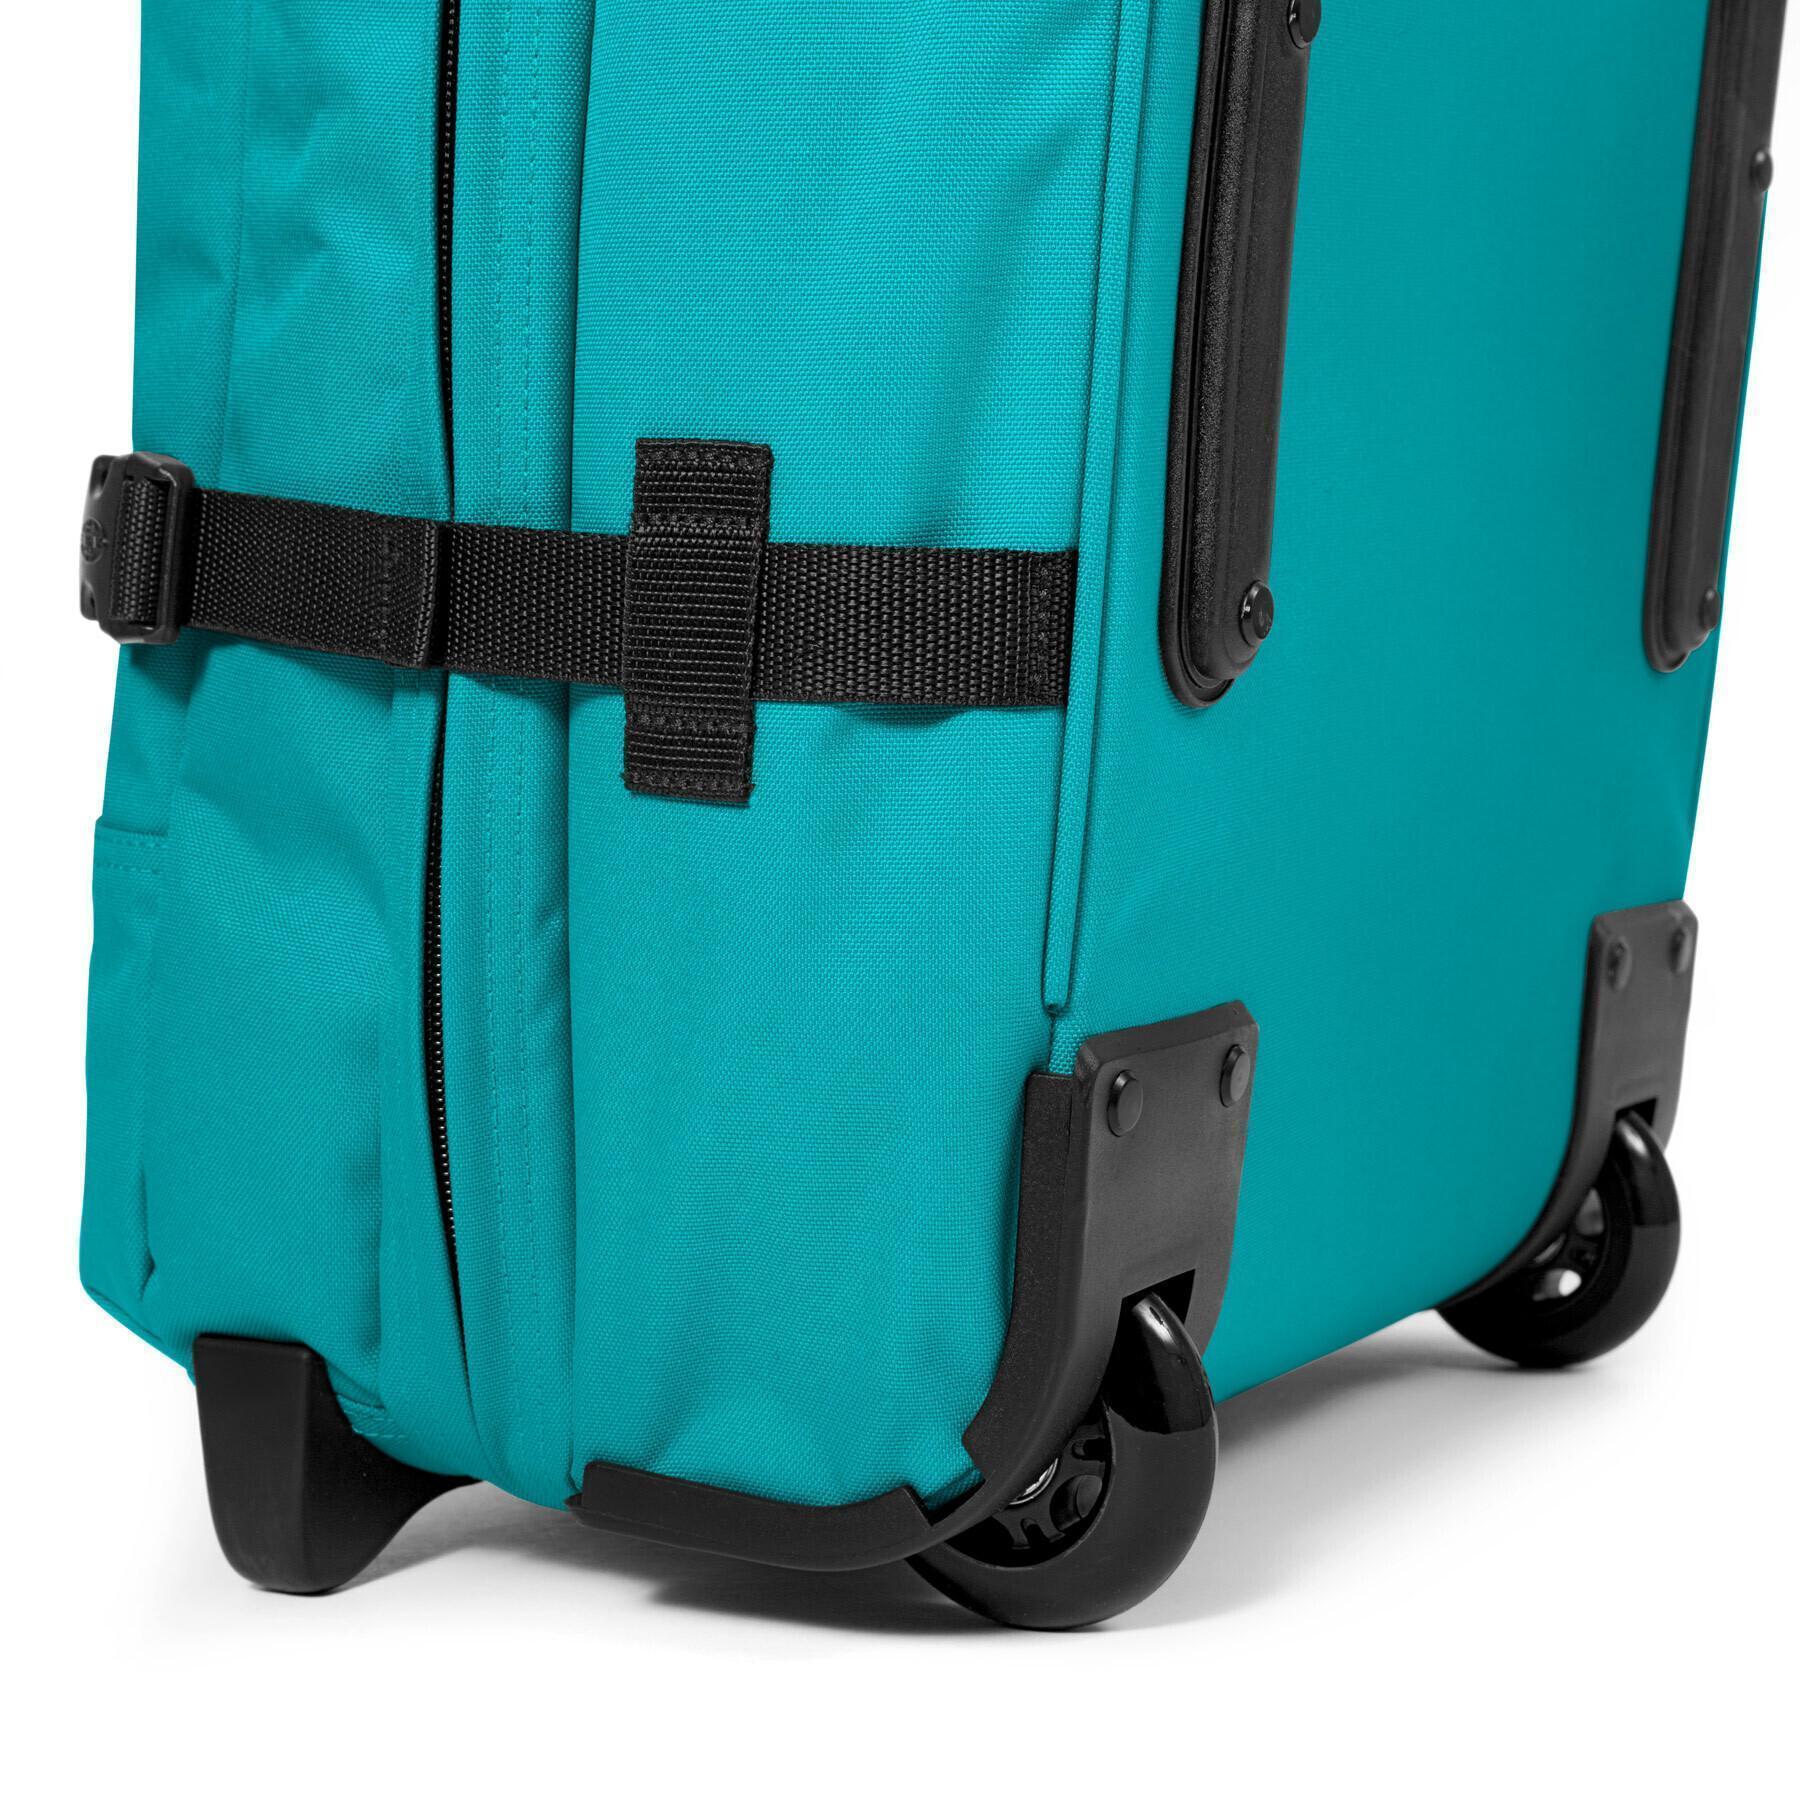 Eastpak Tranverz L suitcase